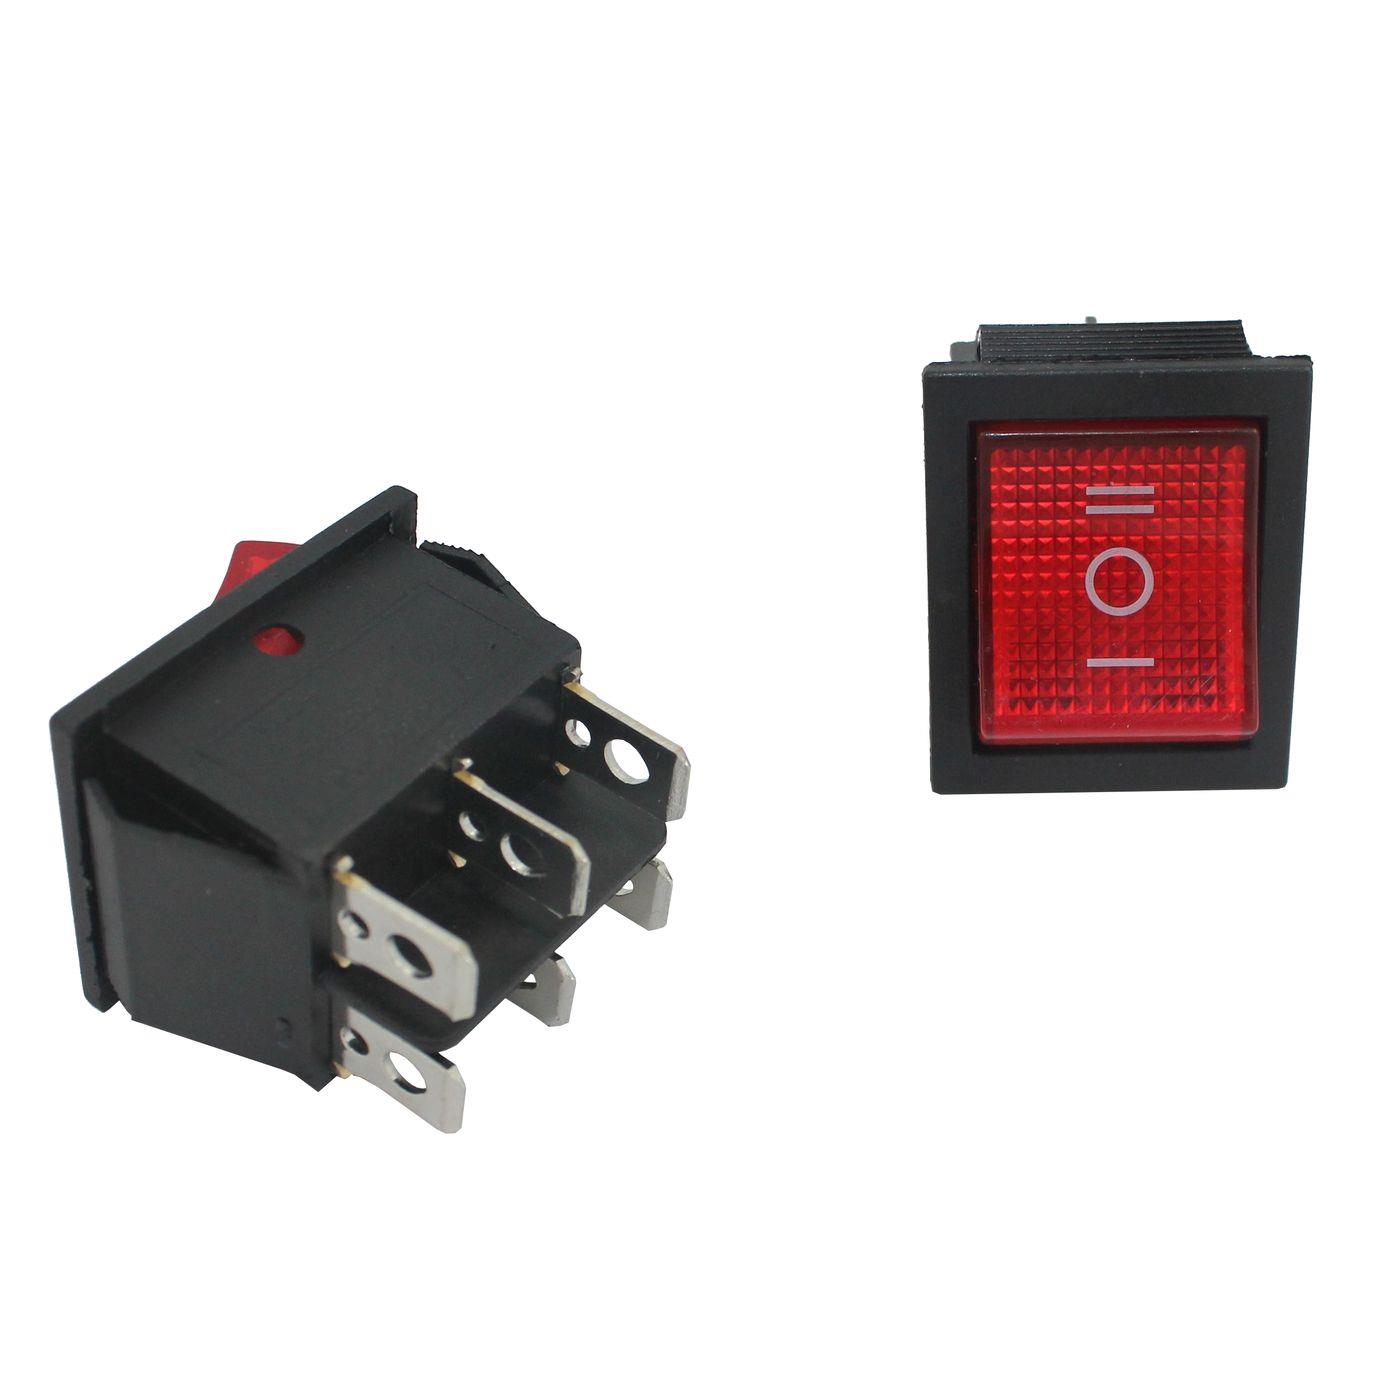 5x Toggle switch 2pole 250V 16A I-0-II 31x26mm Red Rocker switch